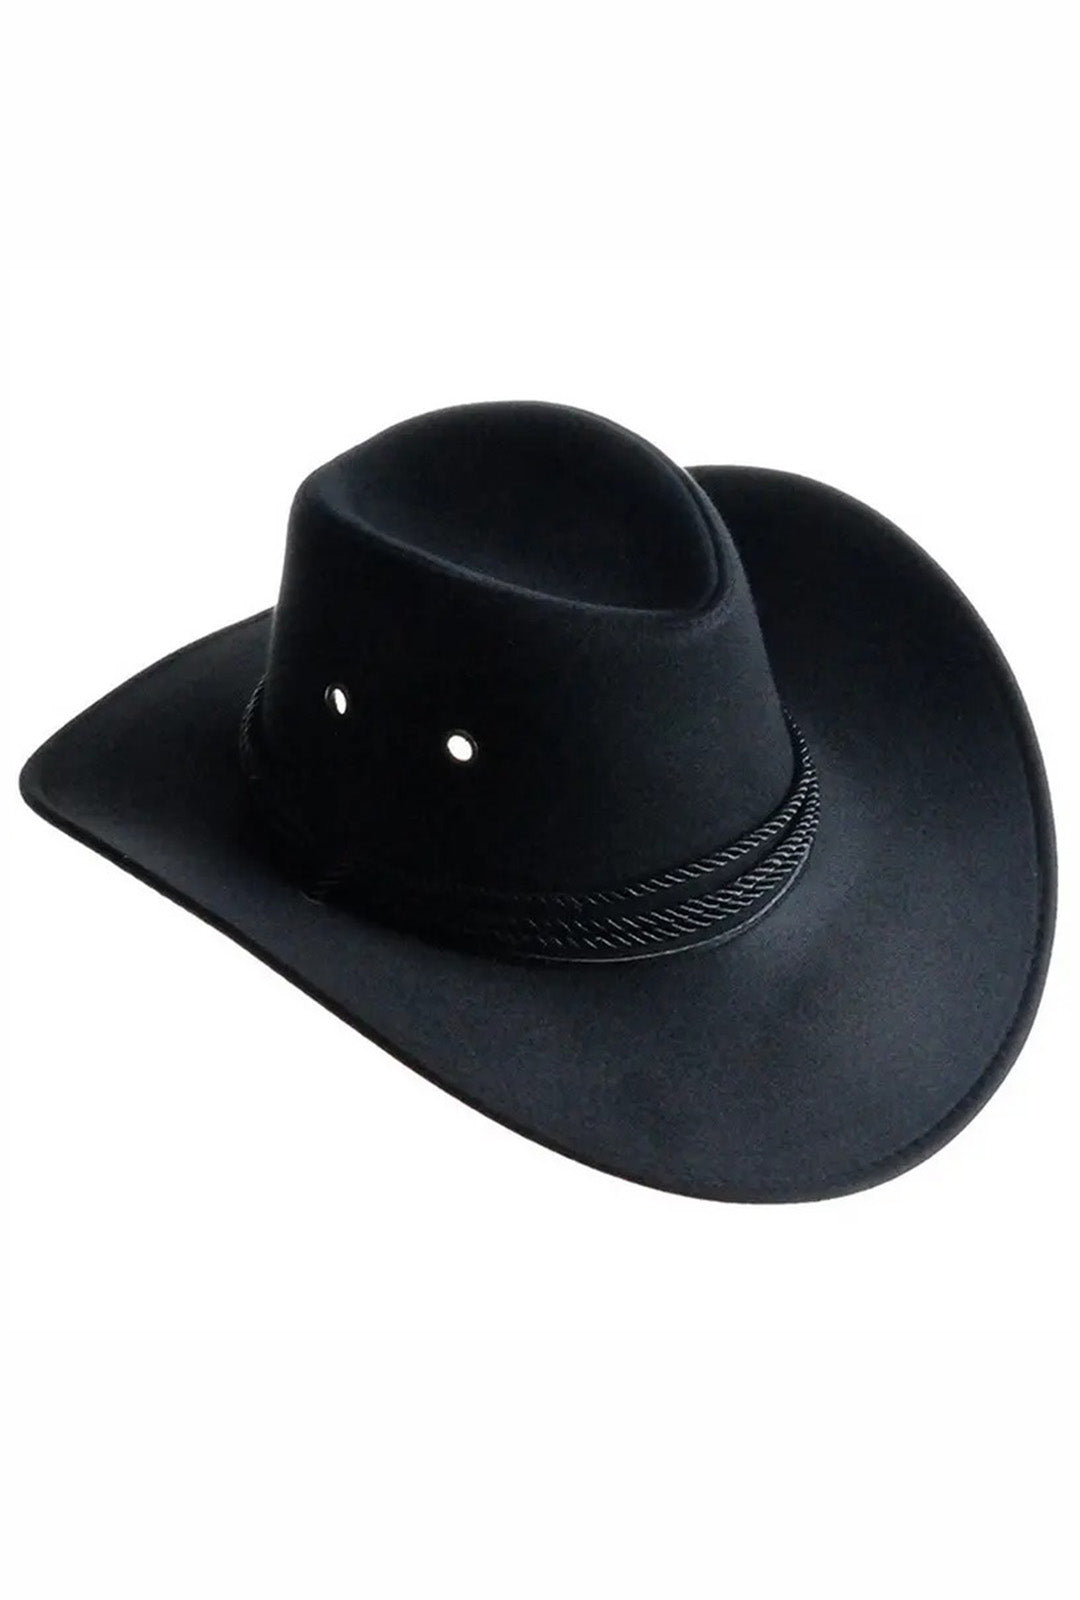 Black Cowboy Hat with Cord Band Perth | Hurly-Burly